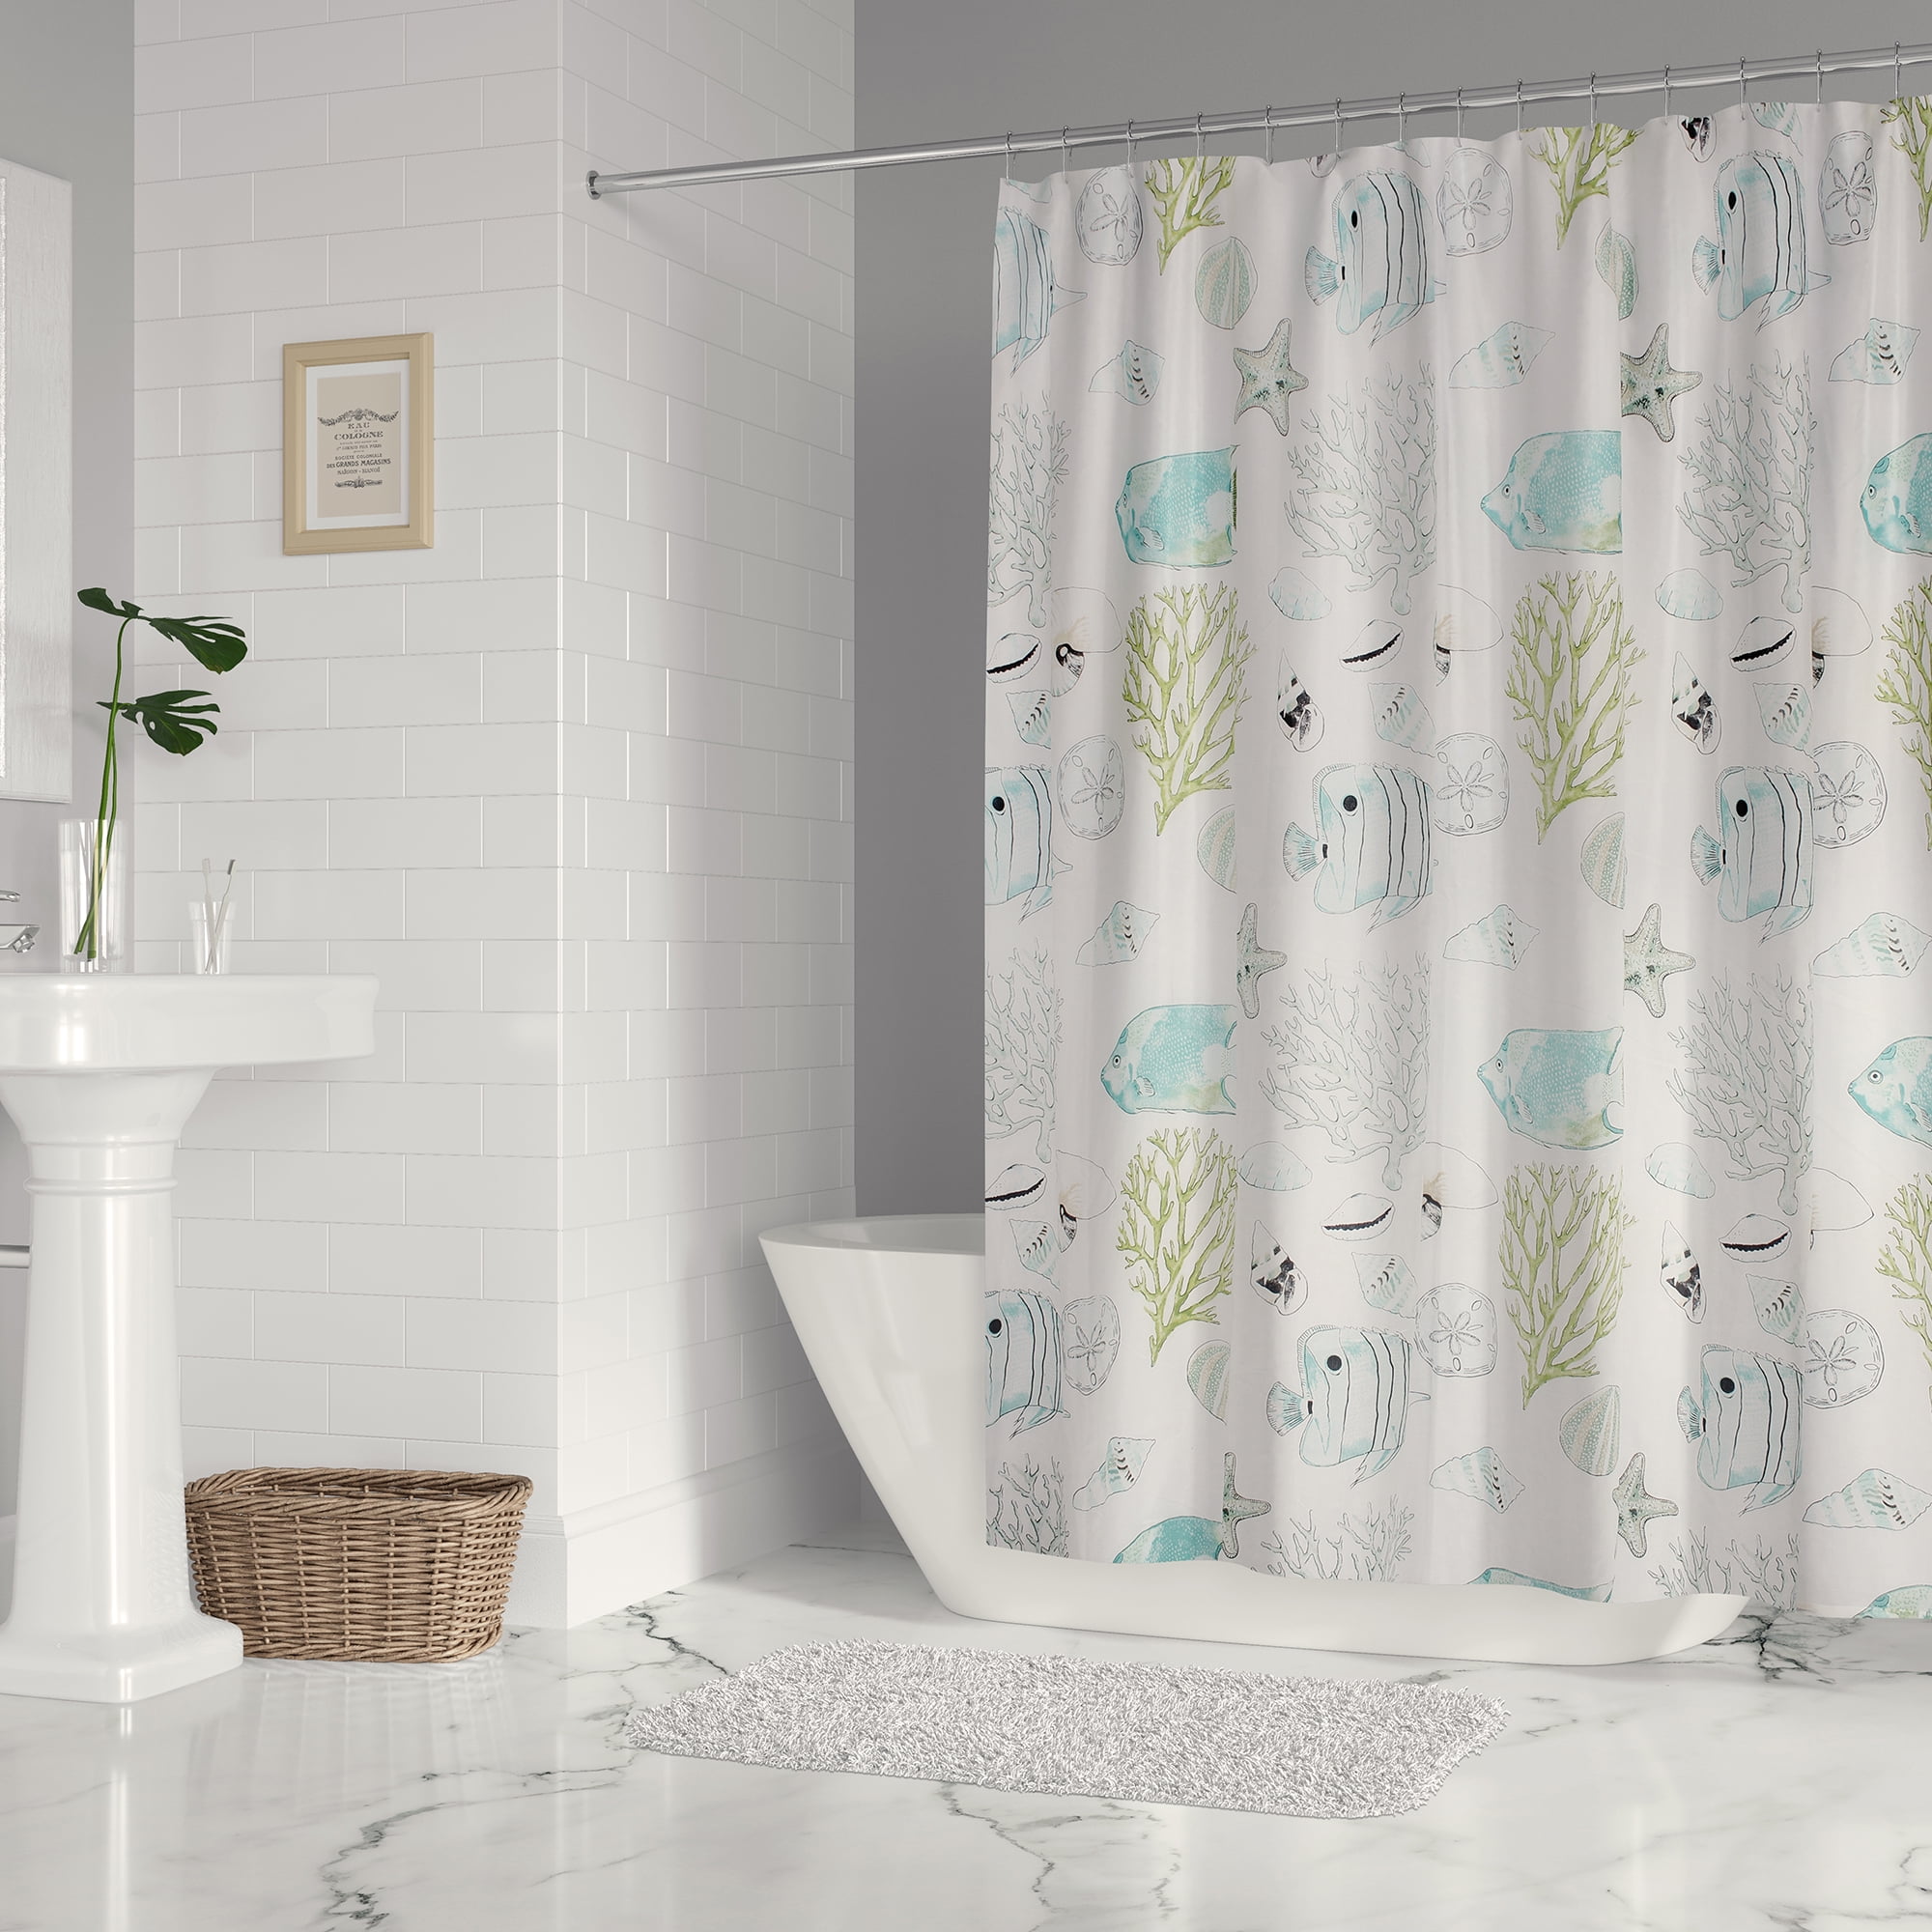 Details about   Blue Horse Flag Shield 3D Shower Curtain Waterproof Fabric Bathroom Decoration 